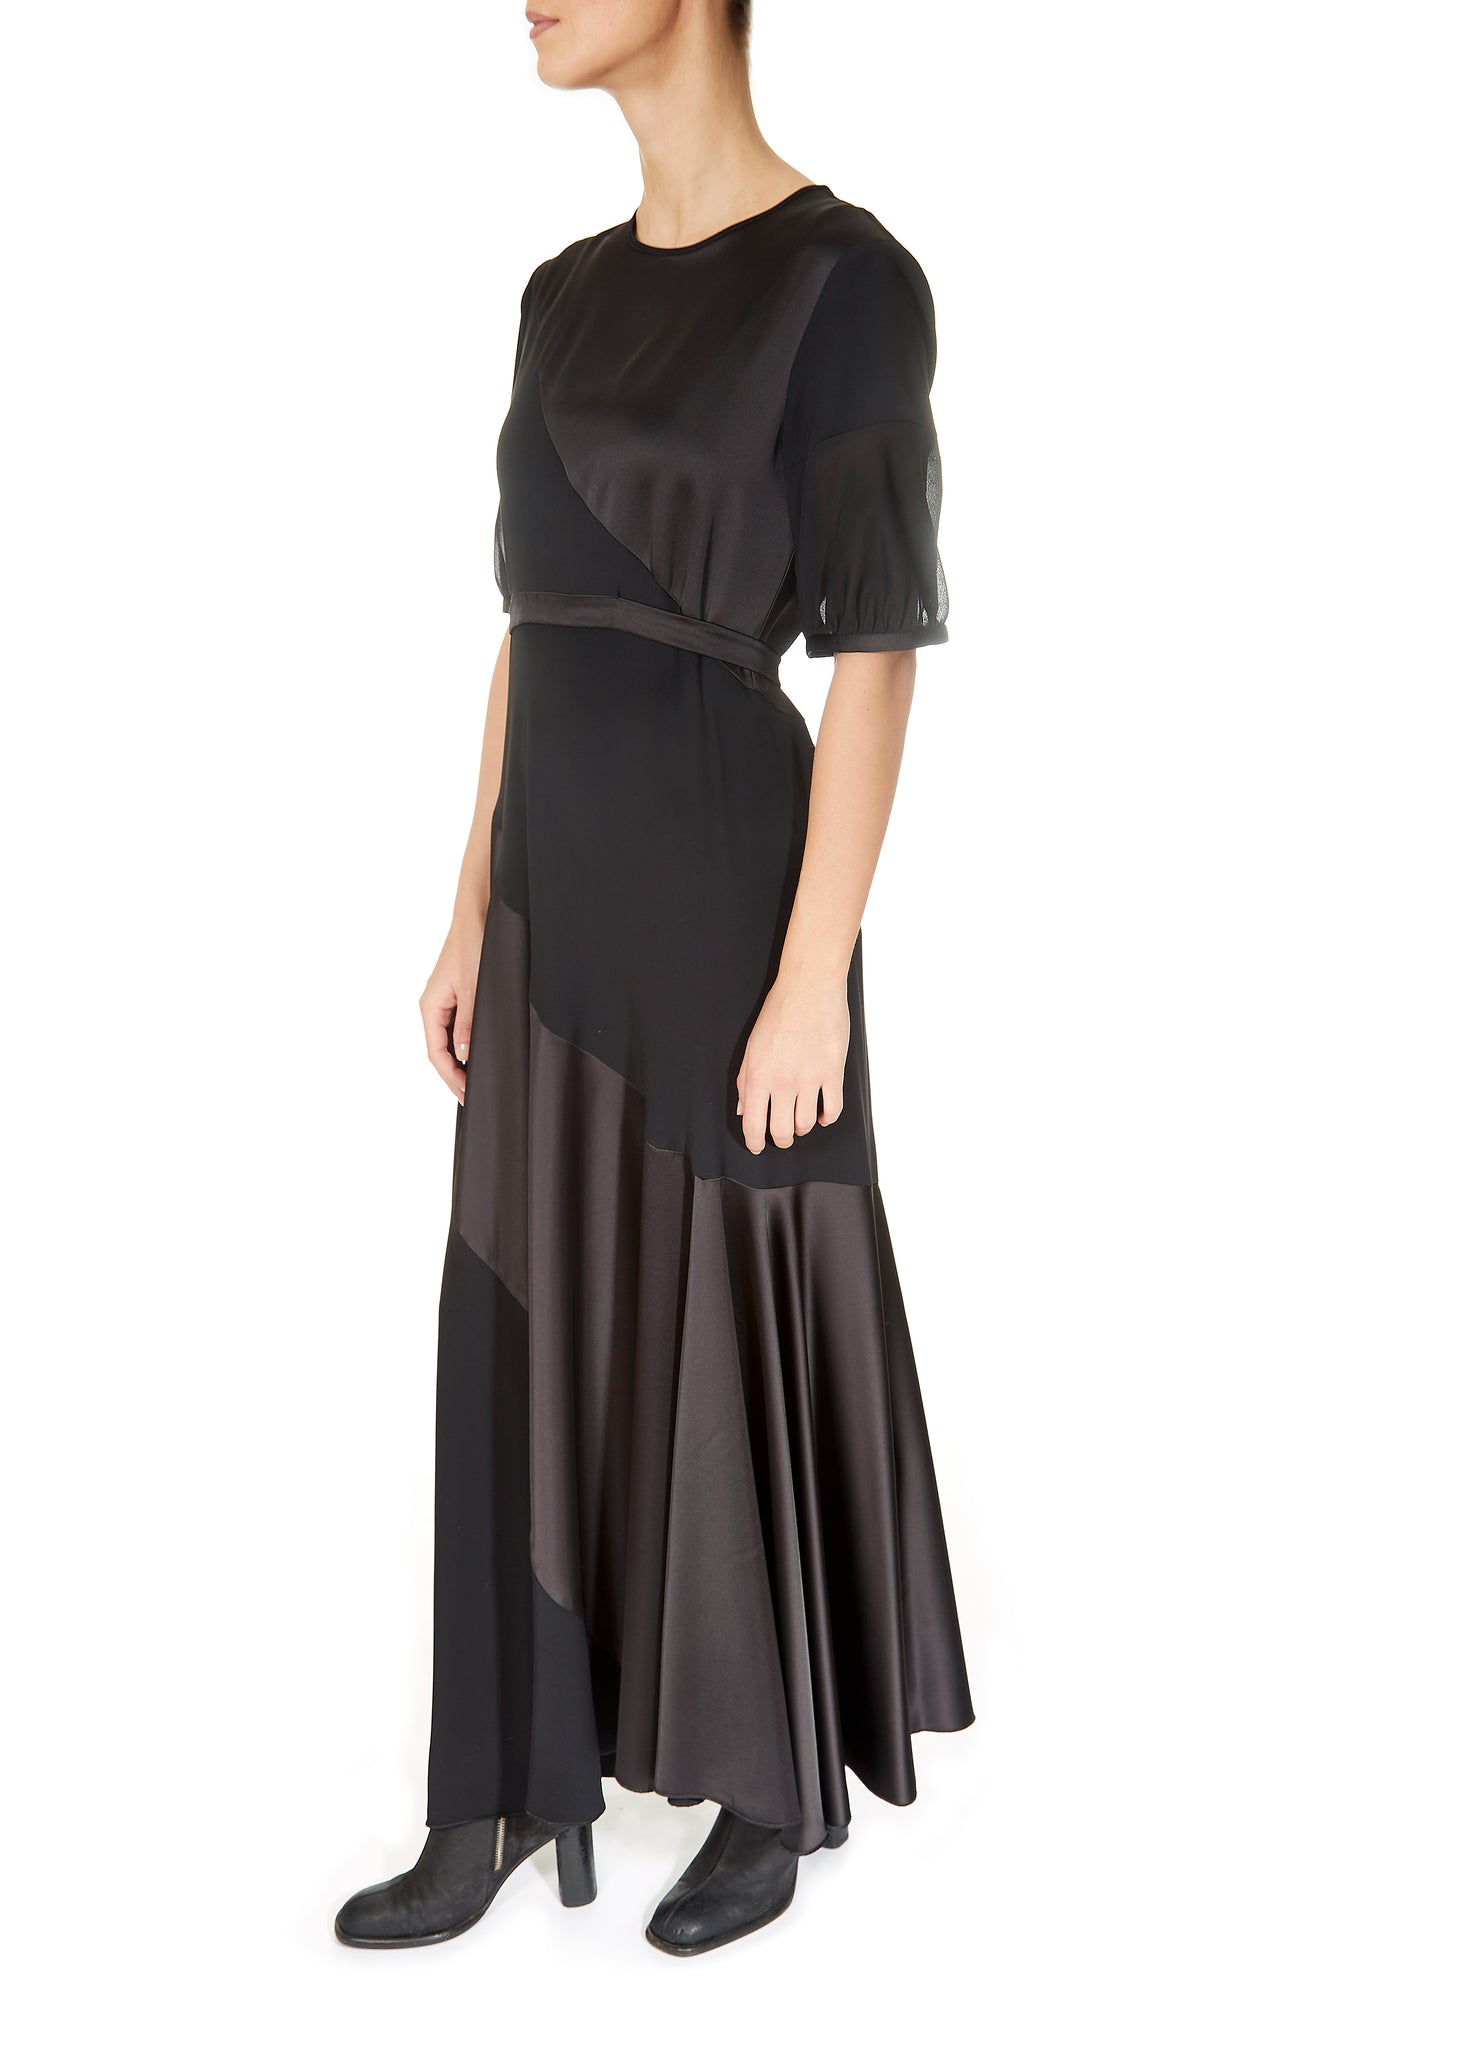 'Surpass' Black Satin Long Dress - Jessimara